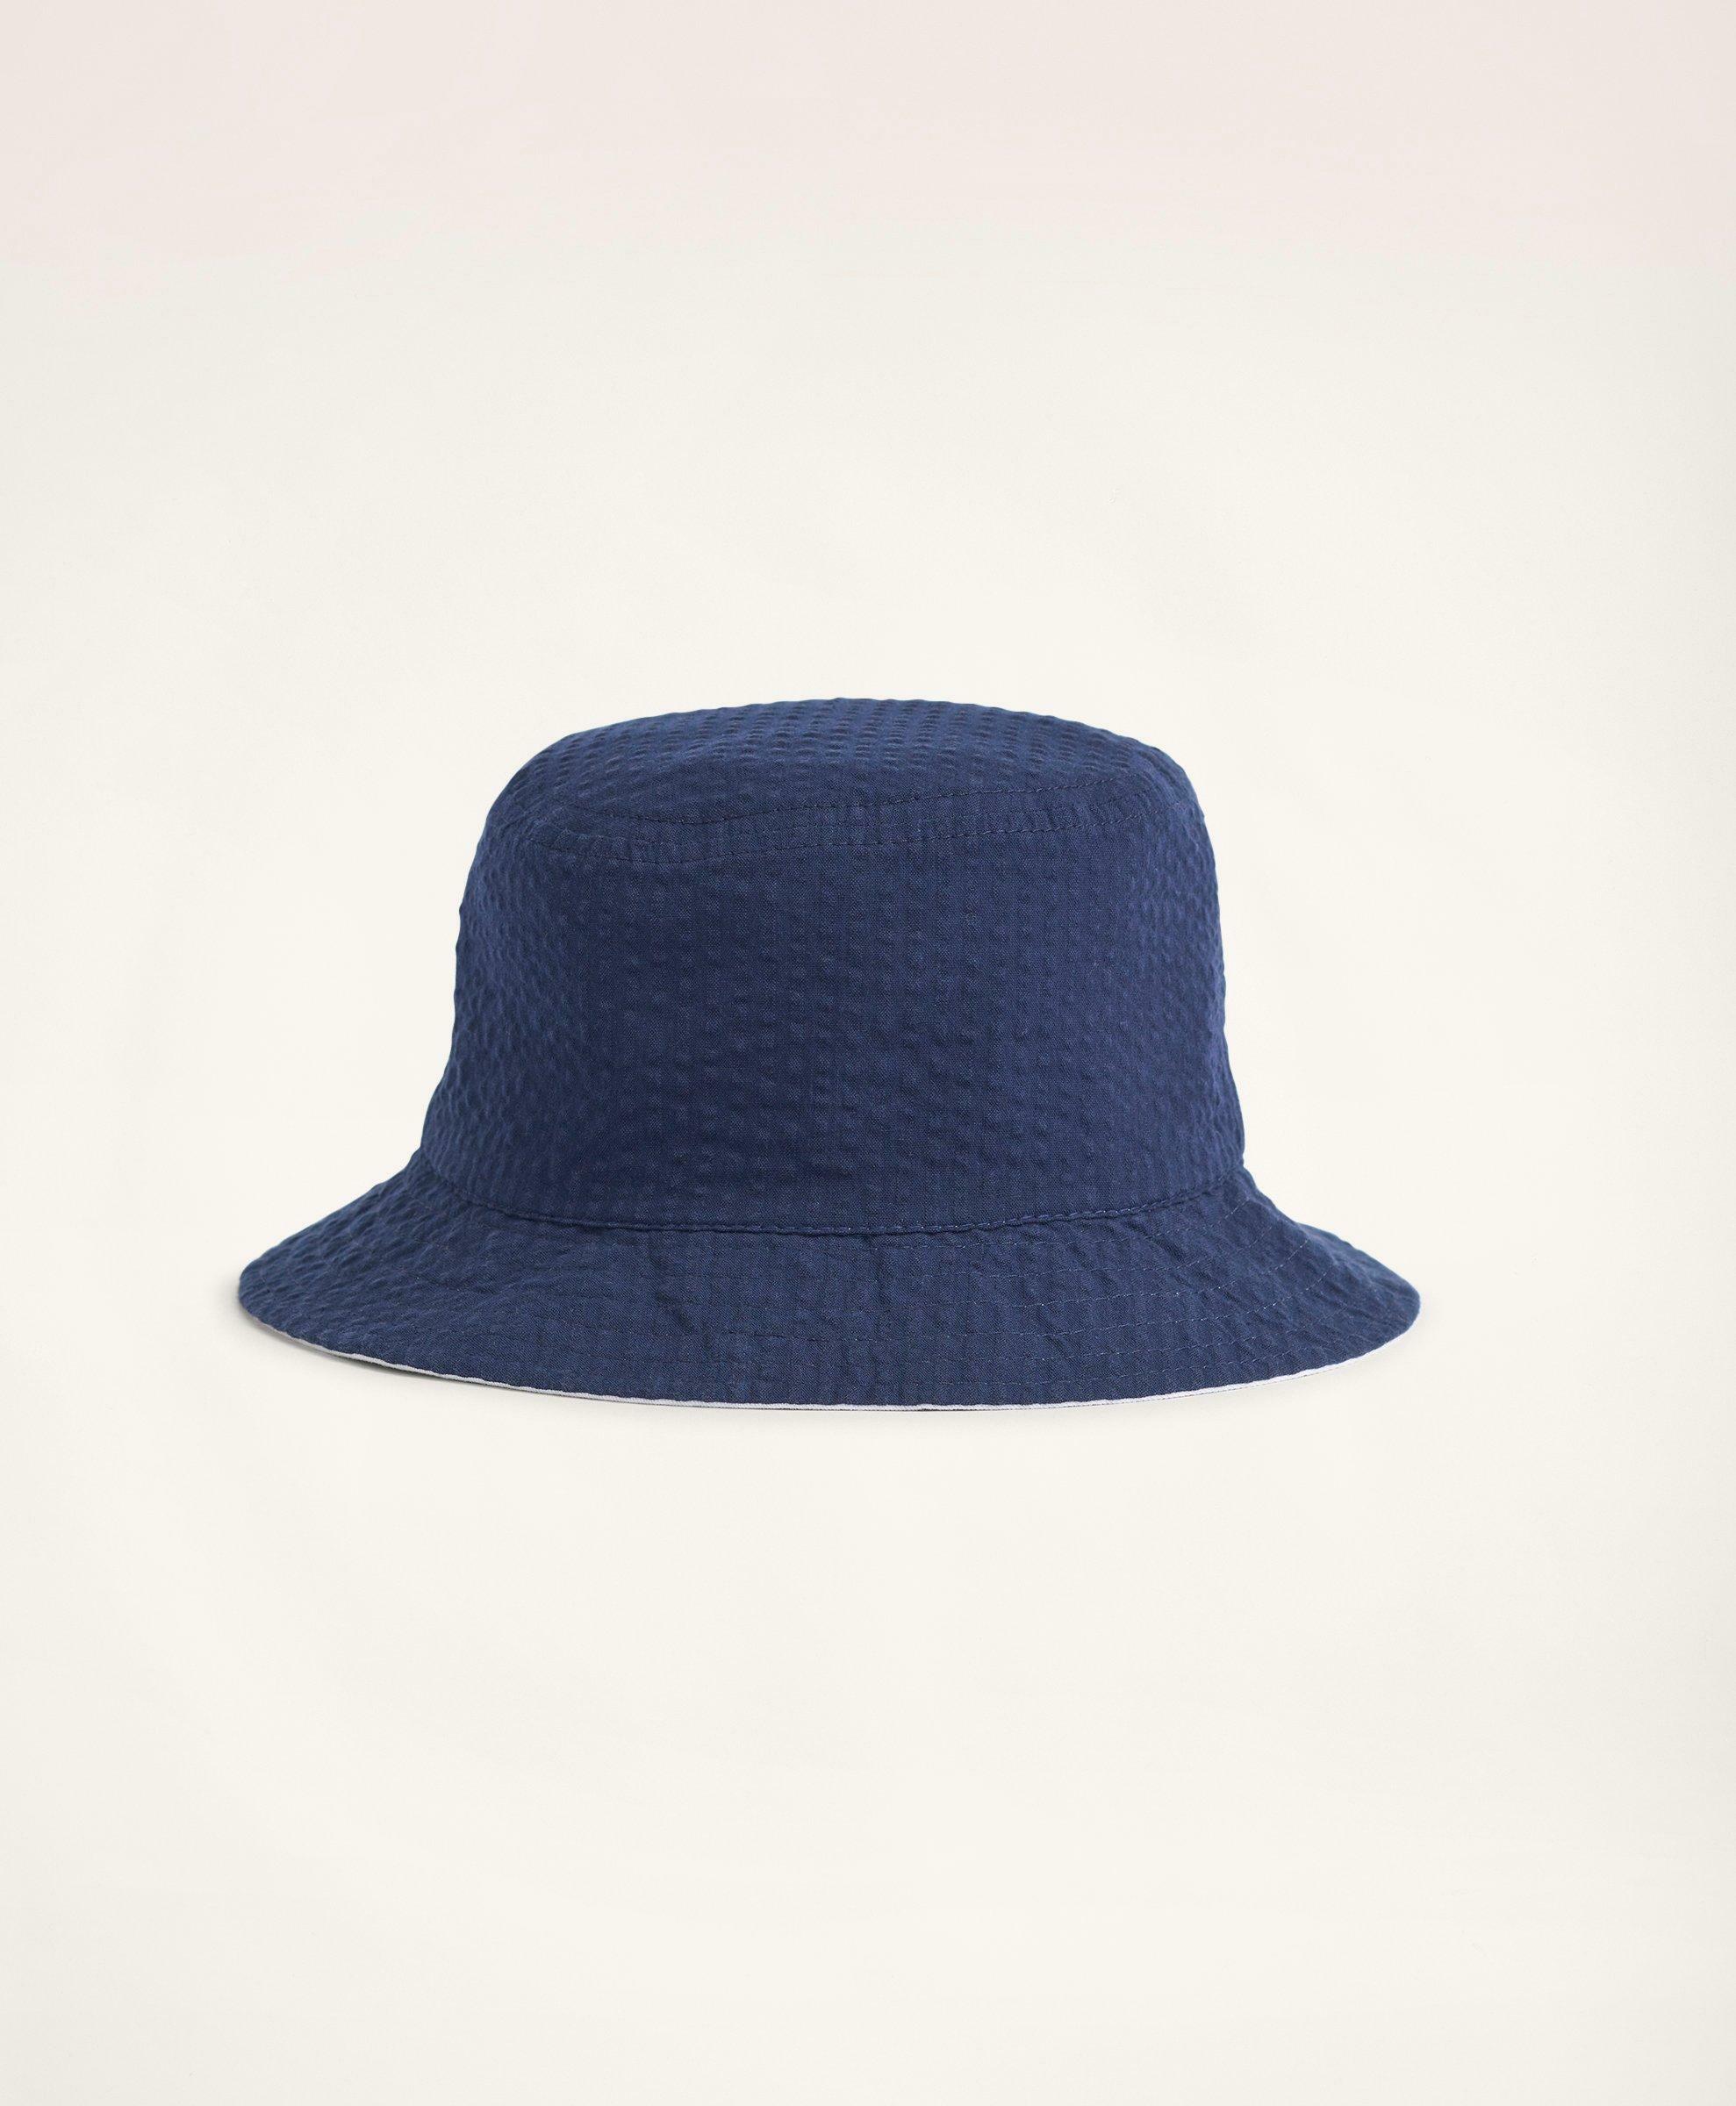 Brooks Brothers Men's Reversible Bucket Hat | White